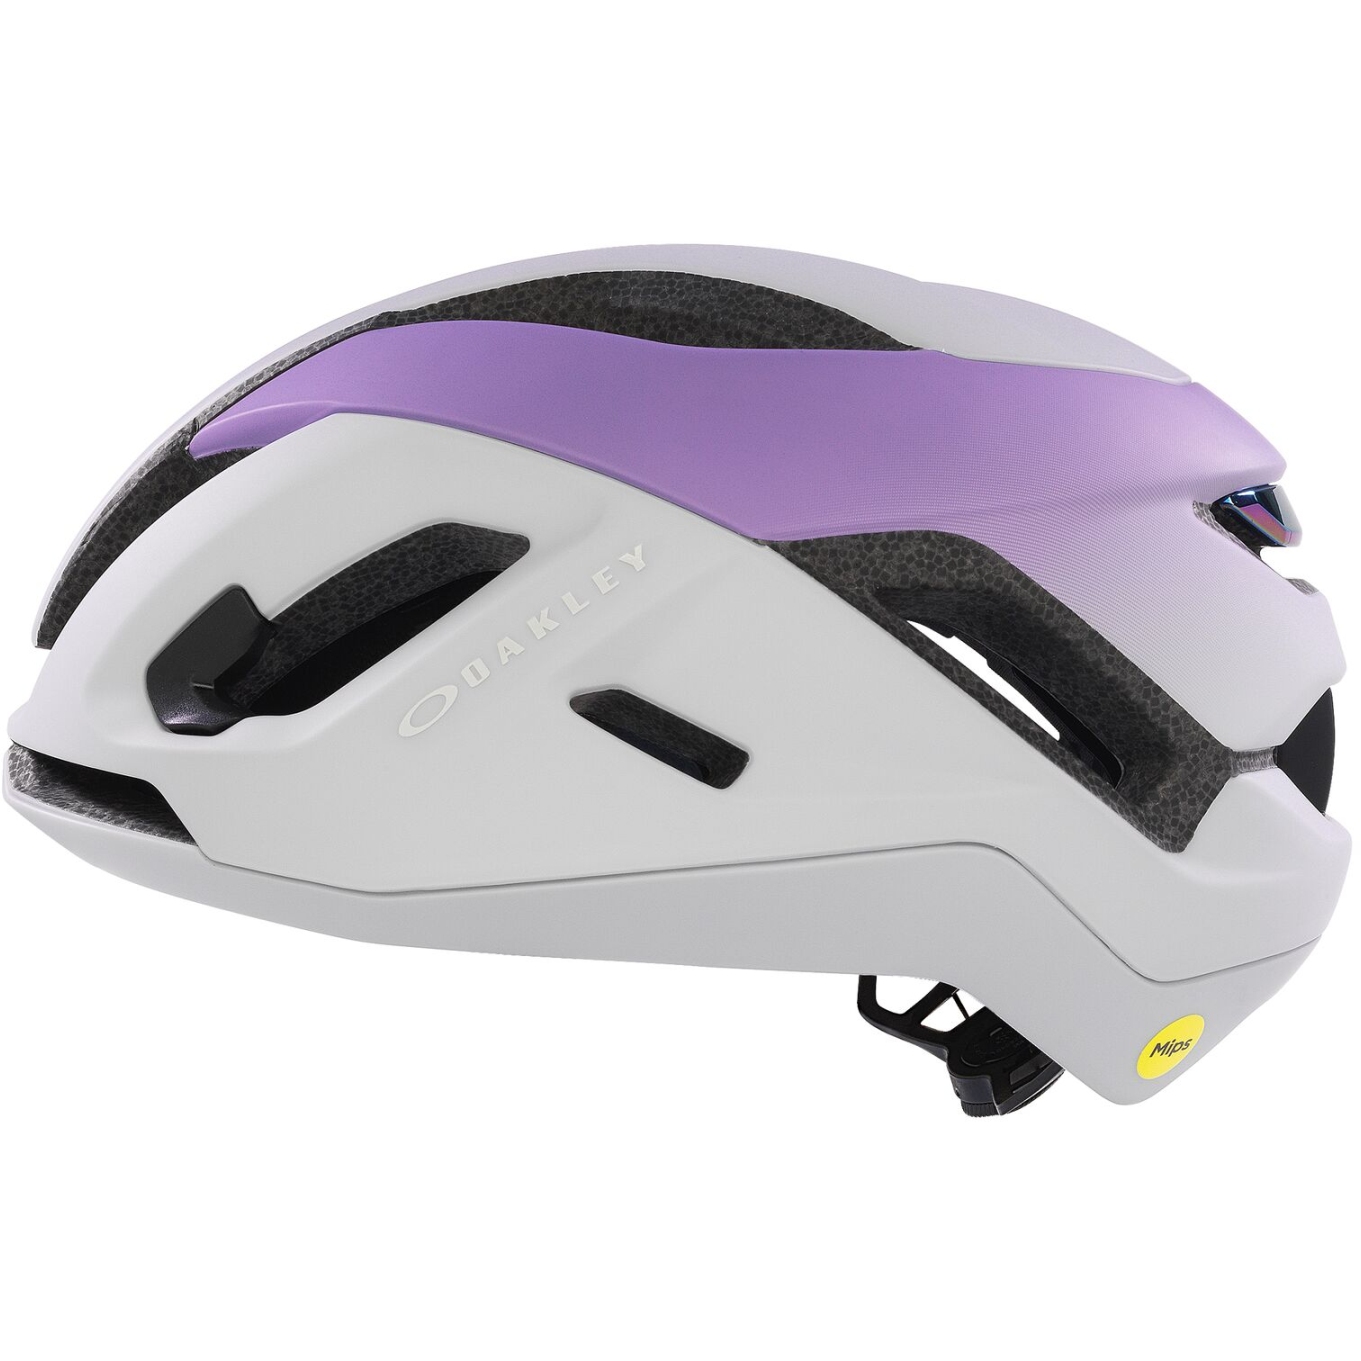 Picture of Oakley ARO5 Race EU Helmet - Light Gray/Lilac